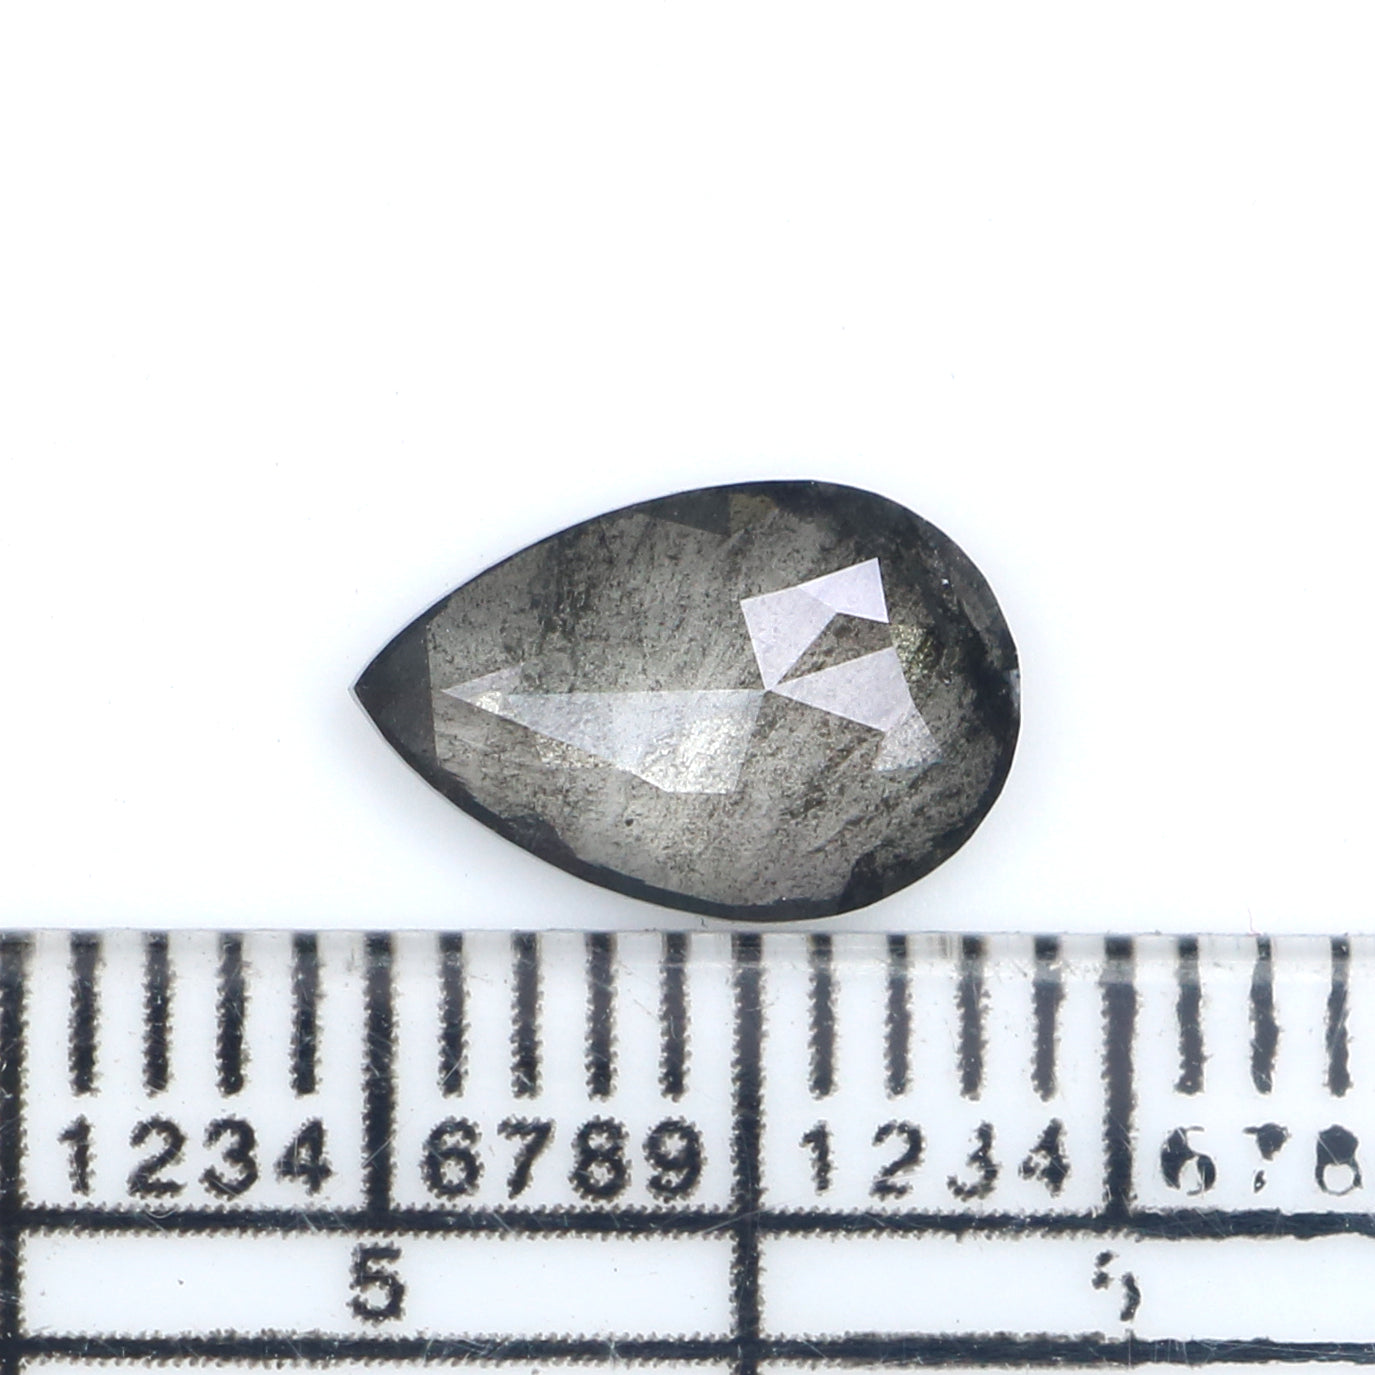 1.12 CT Natural Loose Pear Shape Diamond Salt And Pepper Pear Rose Cut Diamond 9.15 MM Black Grey Color Pear Shape Rose Cut Diamond QL2710